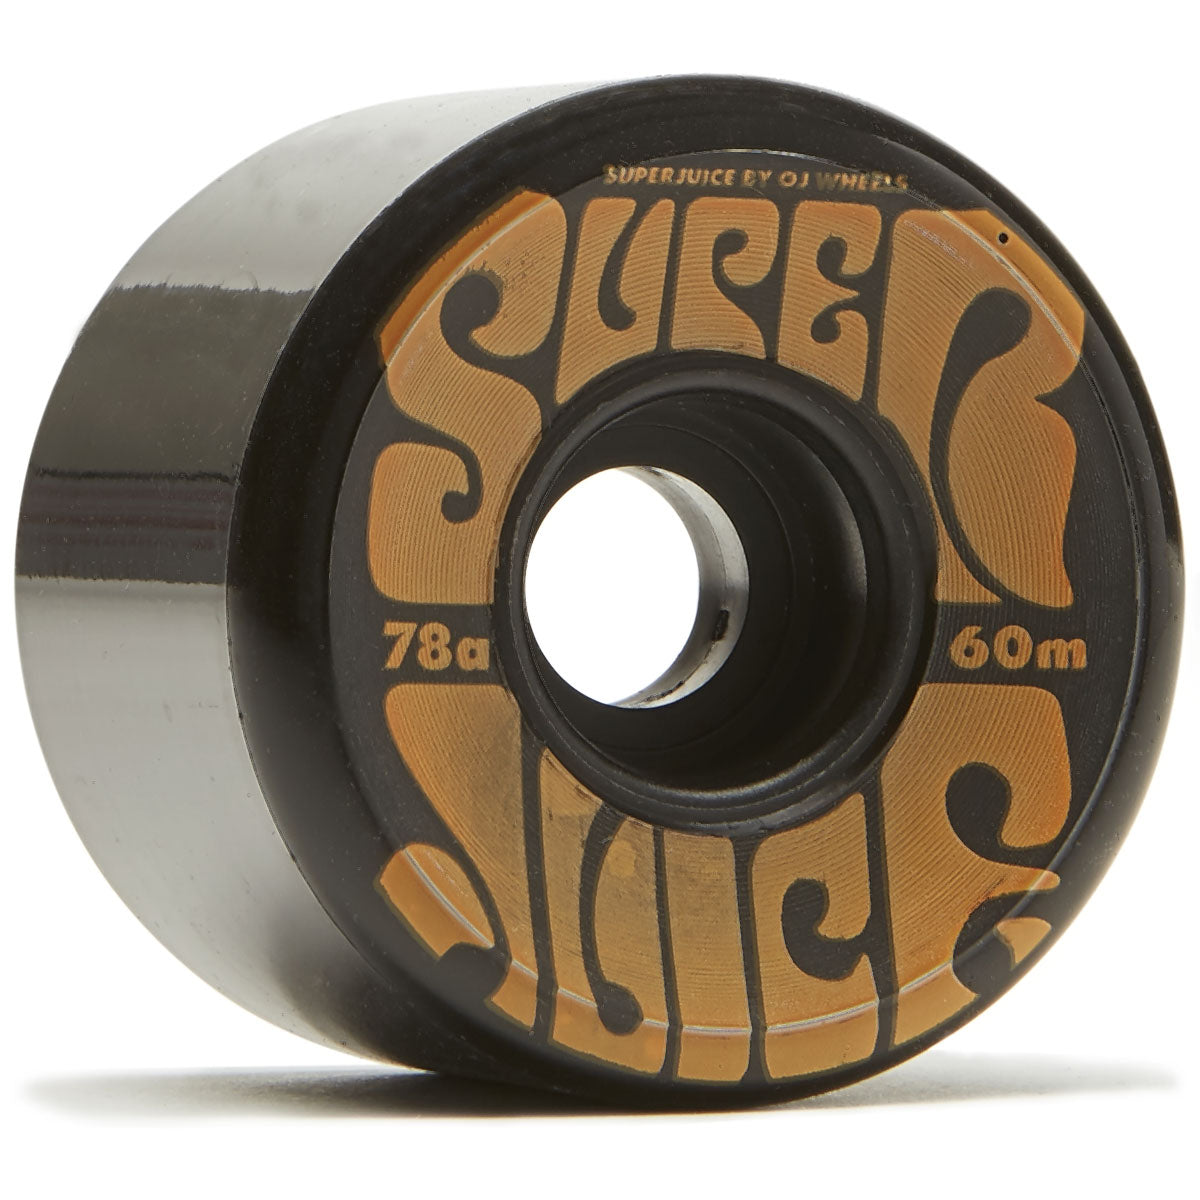 OJ Super Juice 78a Skateboard Wheels - Black - 60mm image 1